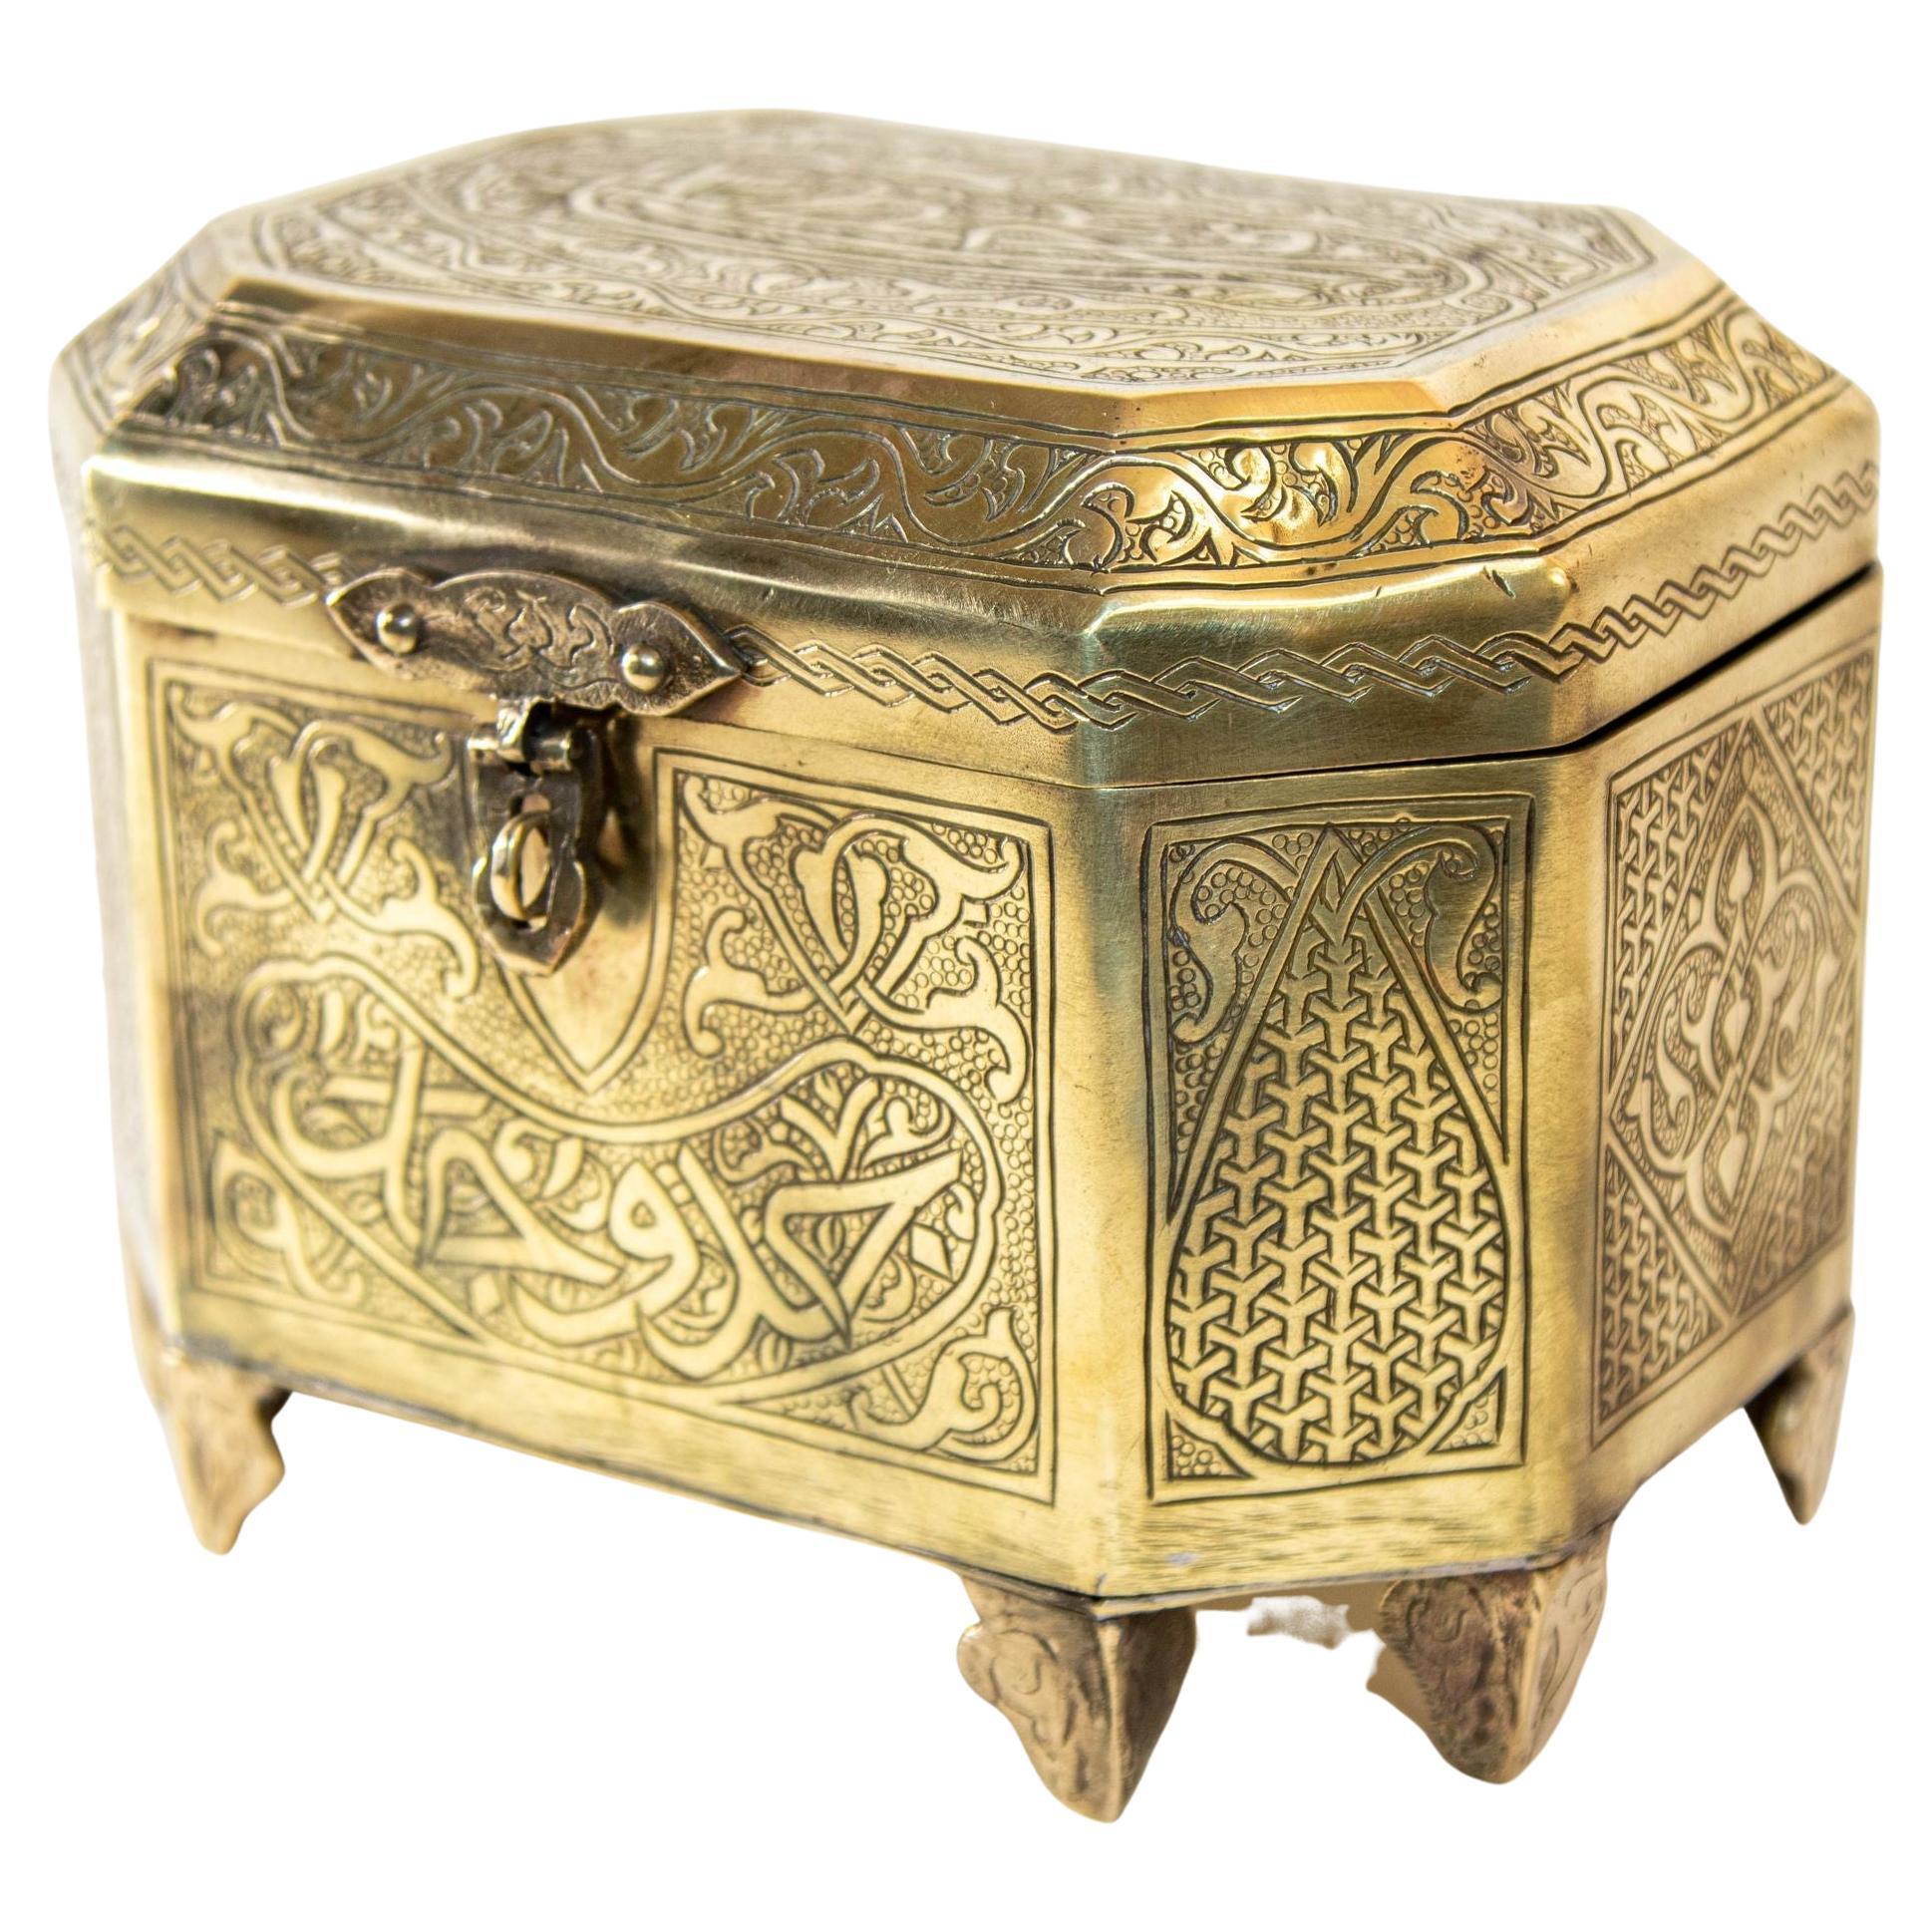 1920 Persian Brass Jewelry Box in Mamluk Revival Damascene Moorish Islamic Style For Sale